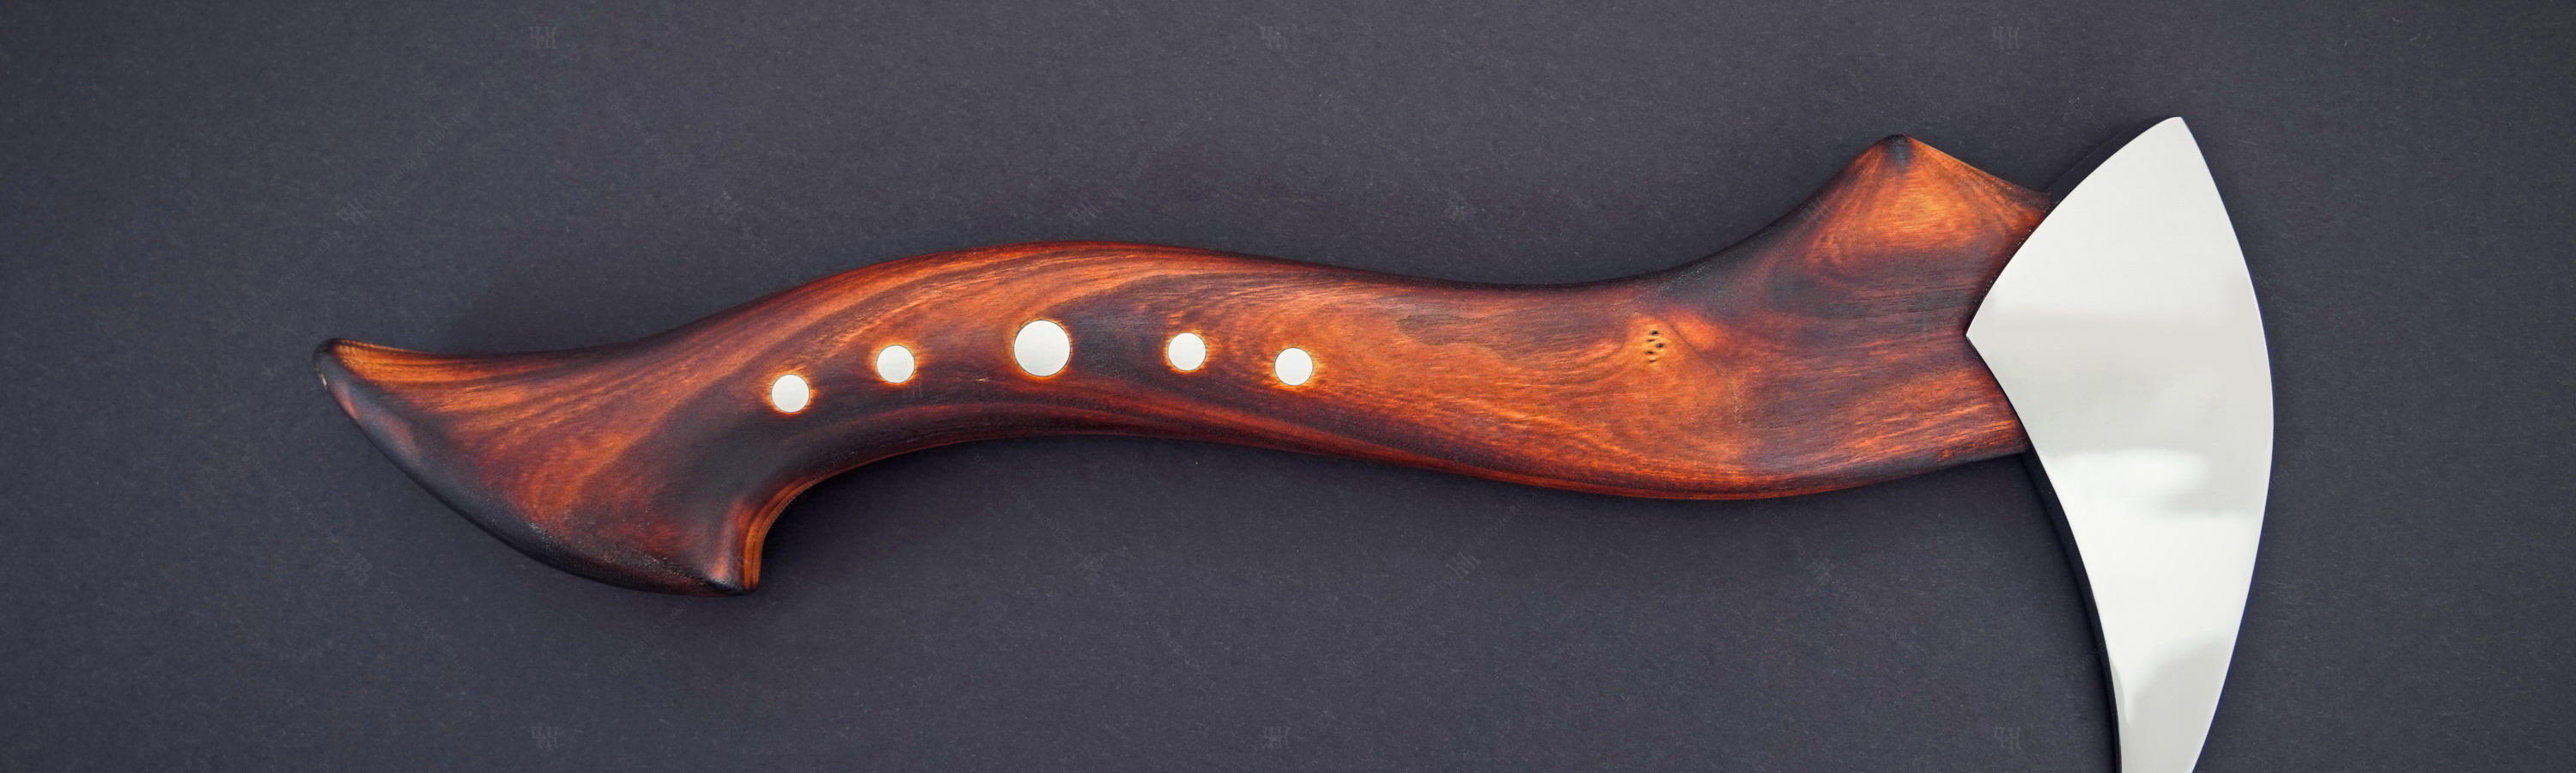 Vintage axe